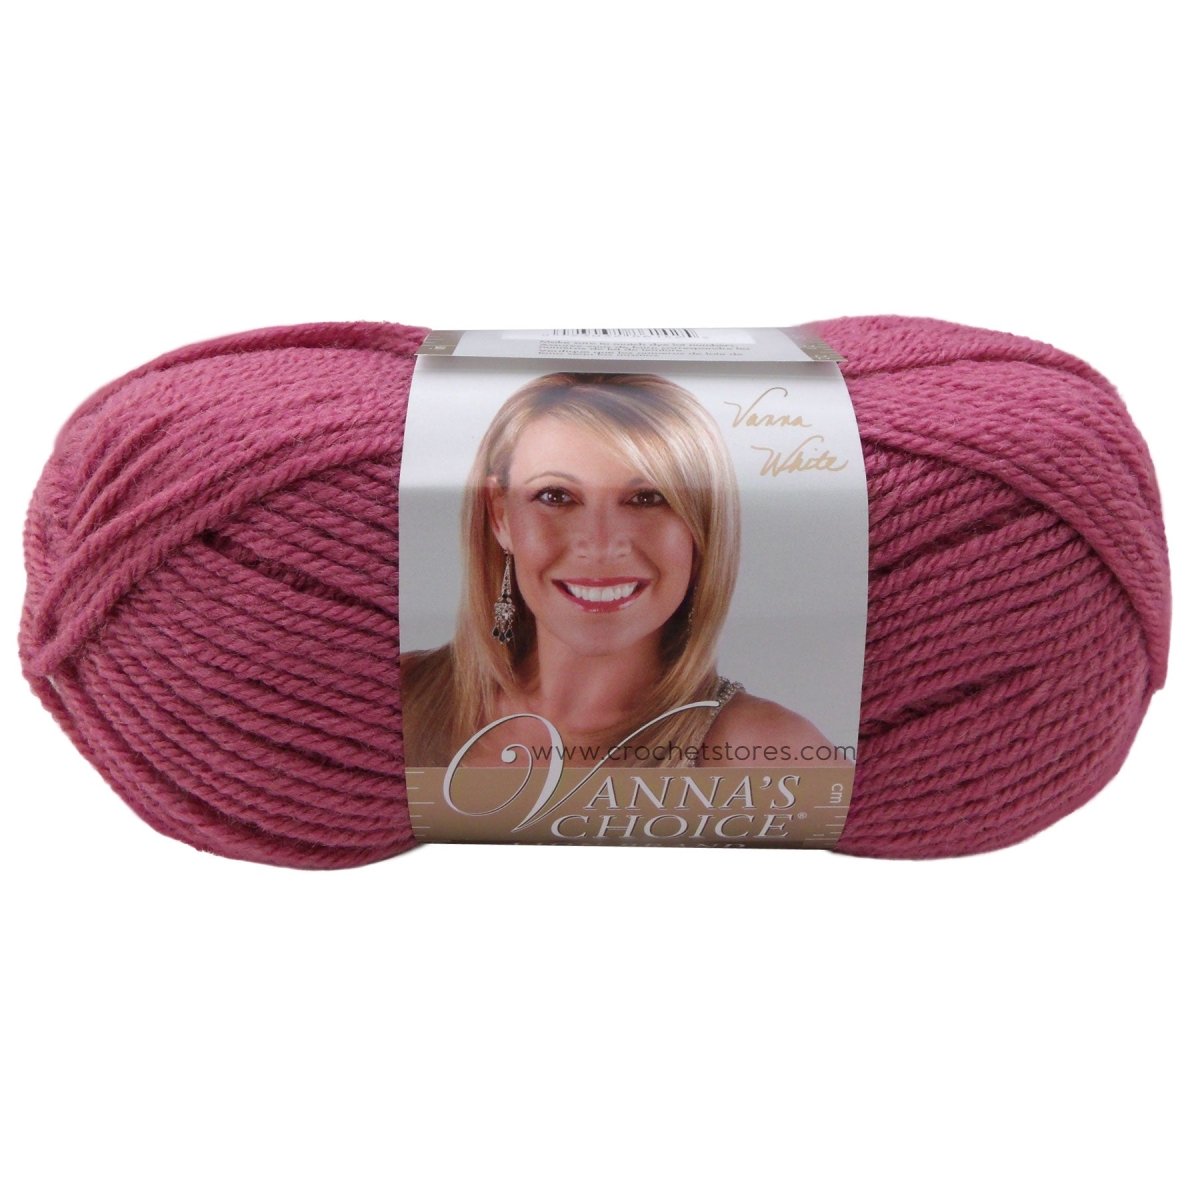 VANNAS CHOICE - Crochetstores860-139